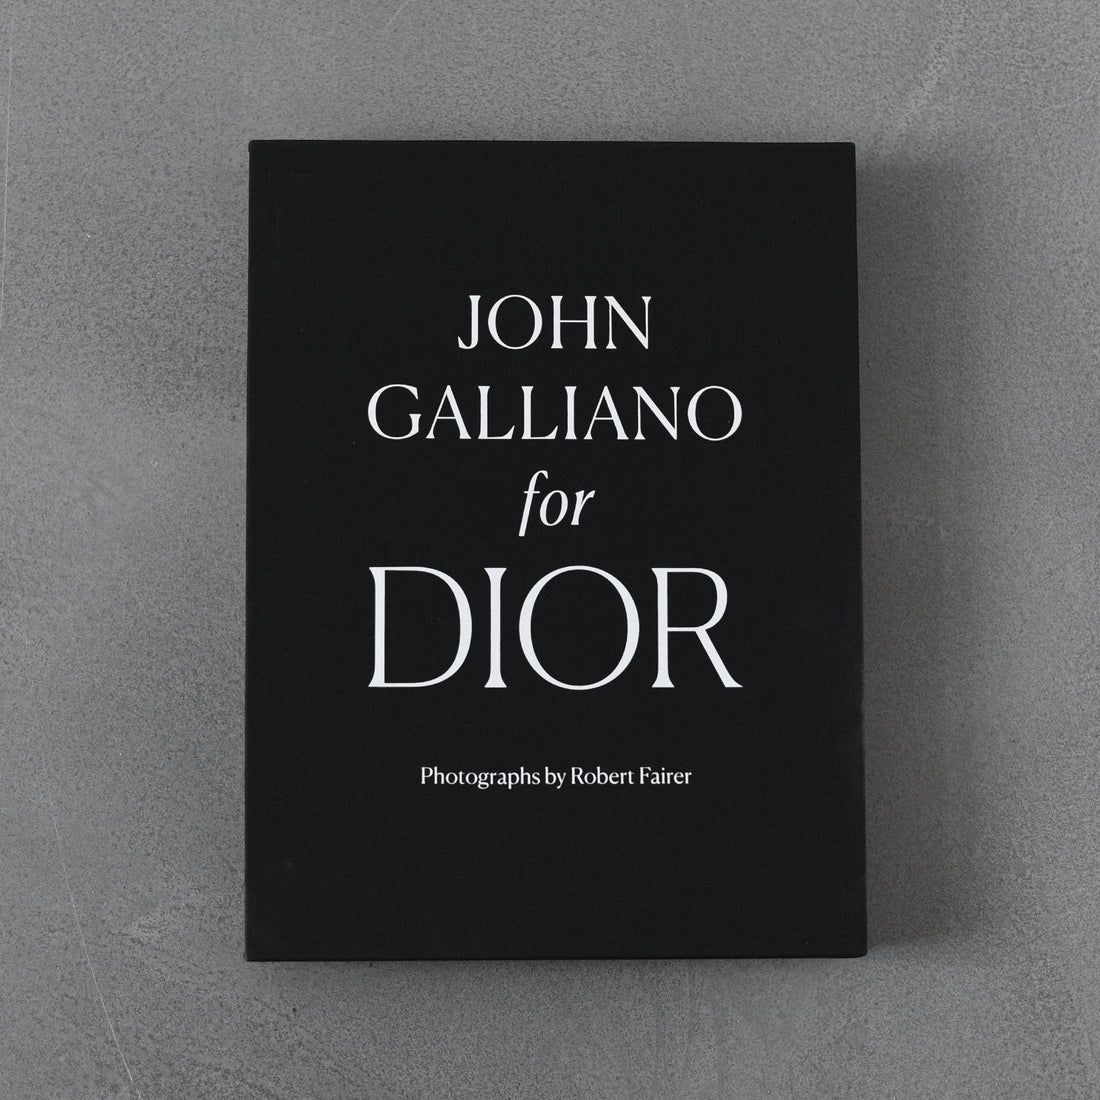 John Galliano dla Diora: zdjęcia Roberta Fairera